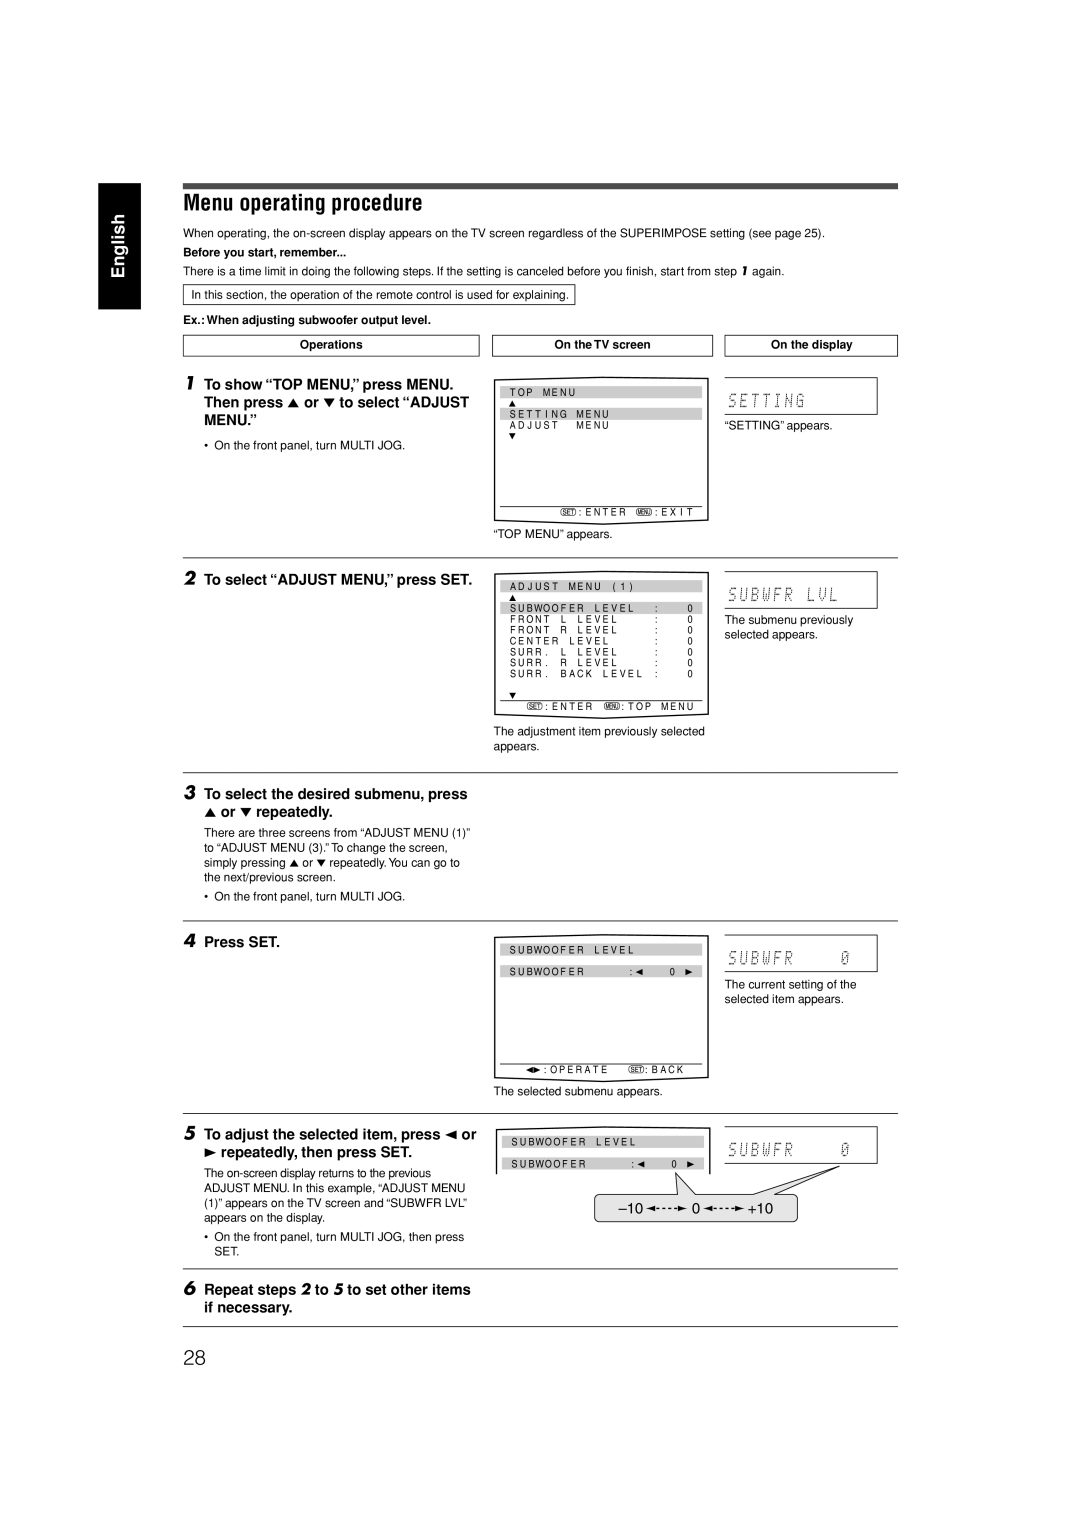 JVC RX-F31S manual Menu operating procedure, English, Menu.”, To select “ADJUST MENU,” press SET, Press SET 